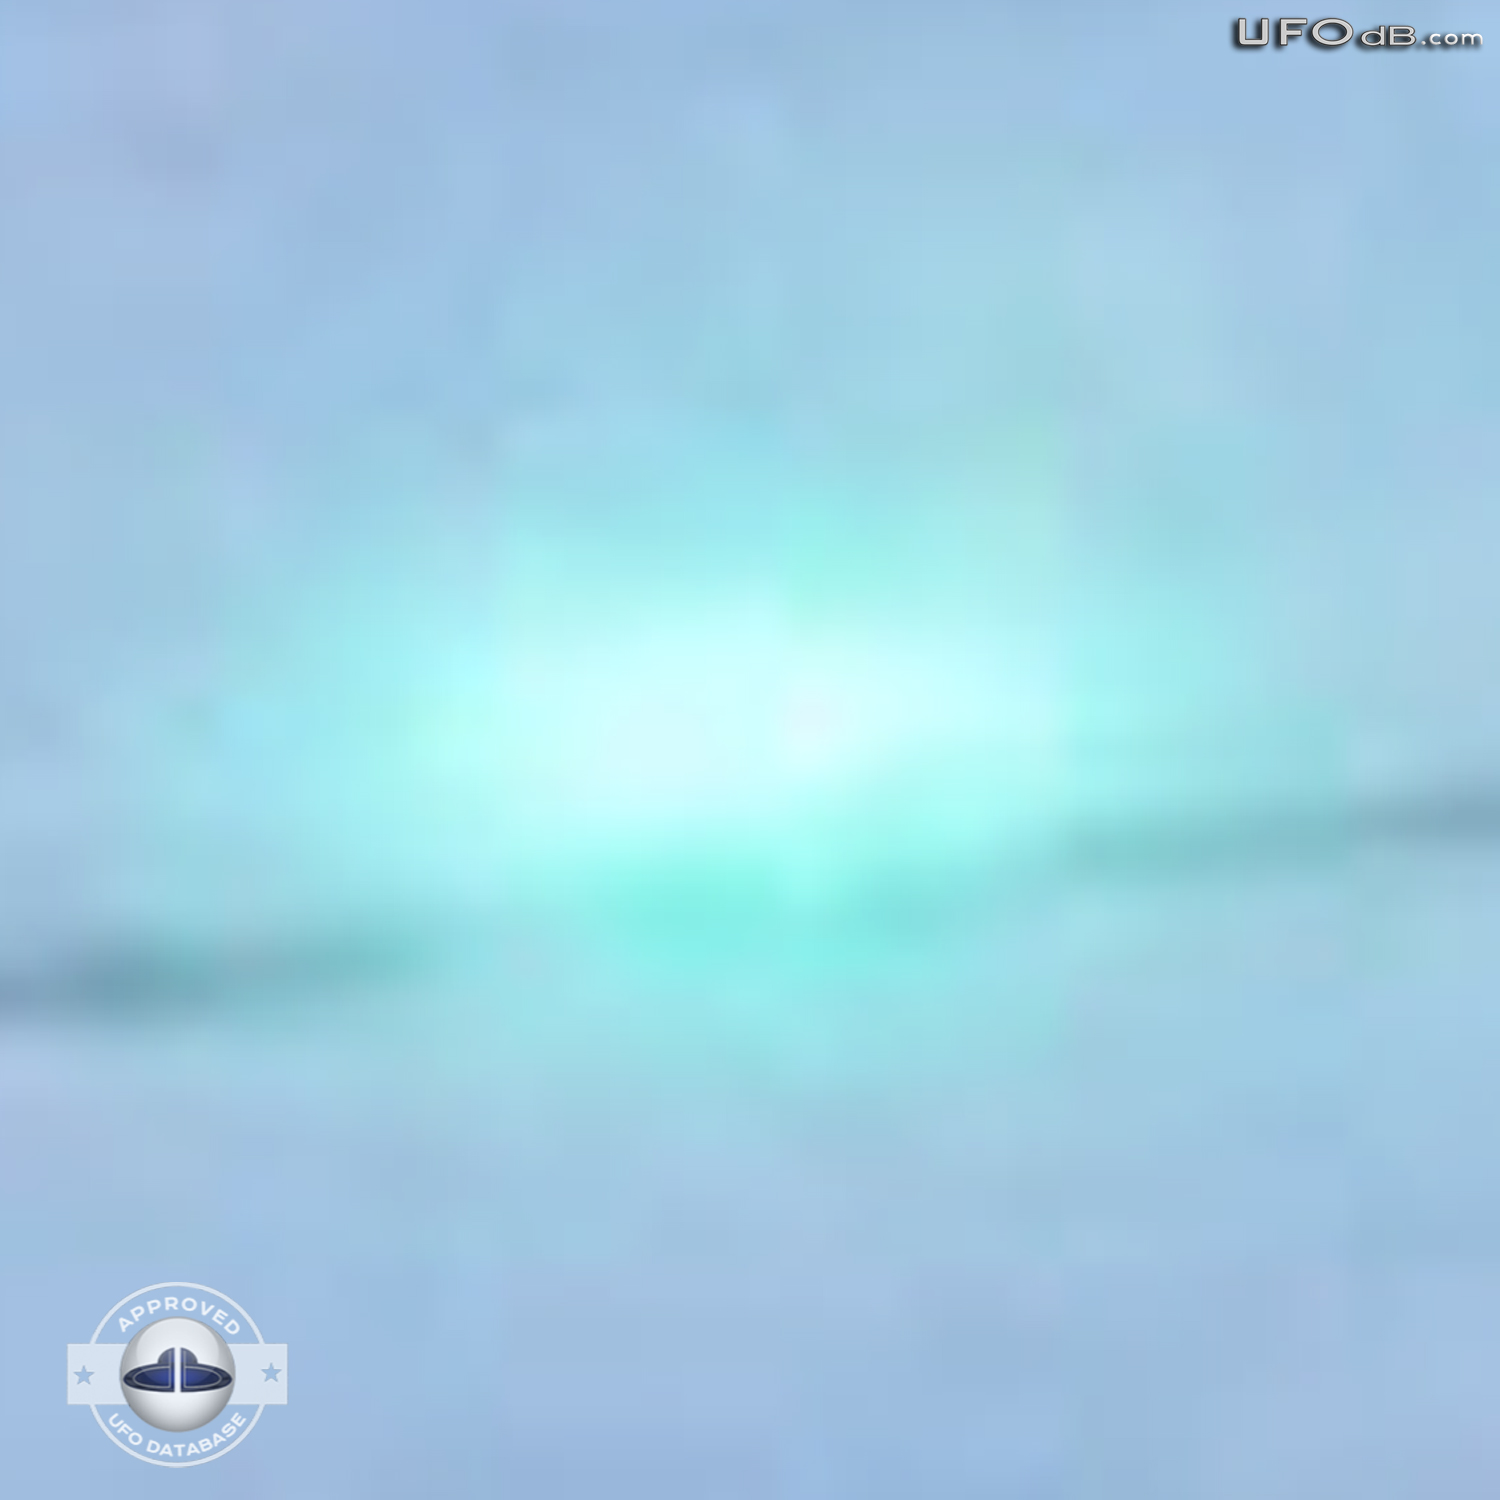 Turquoise flashing lights UFO caught passing over Yakutsk Russia 2011 UFO Picture #350-5